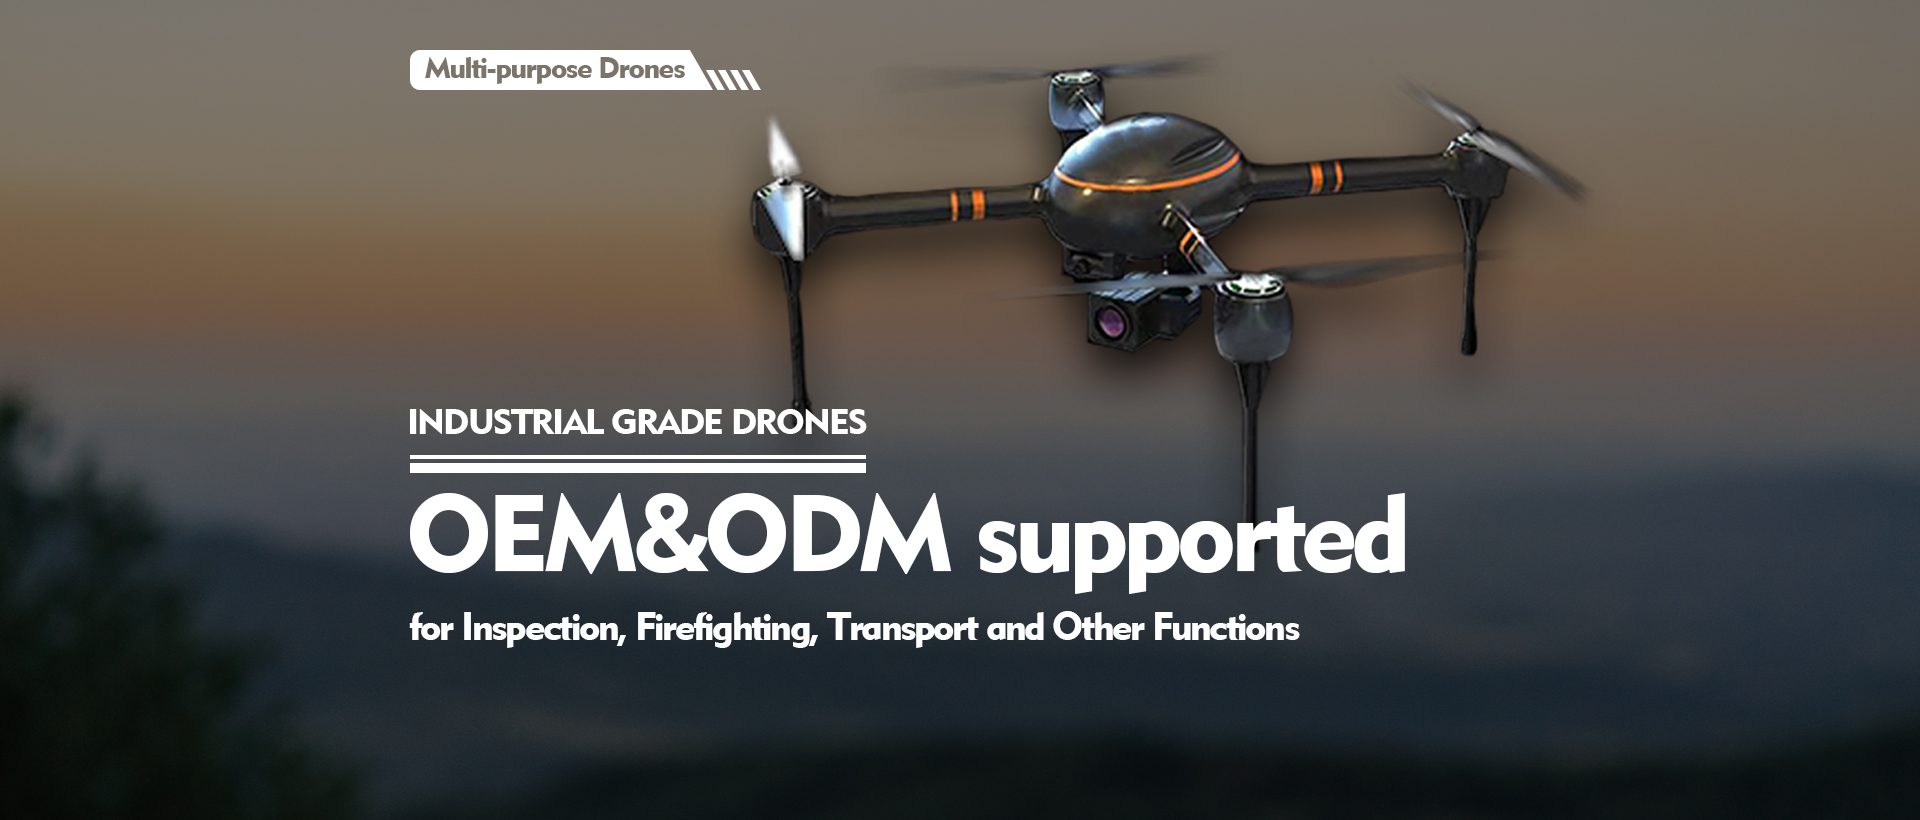 Drone gred industri